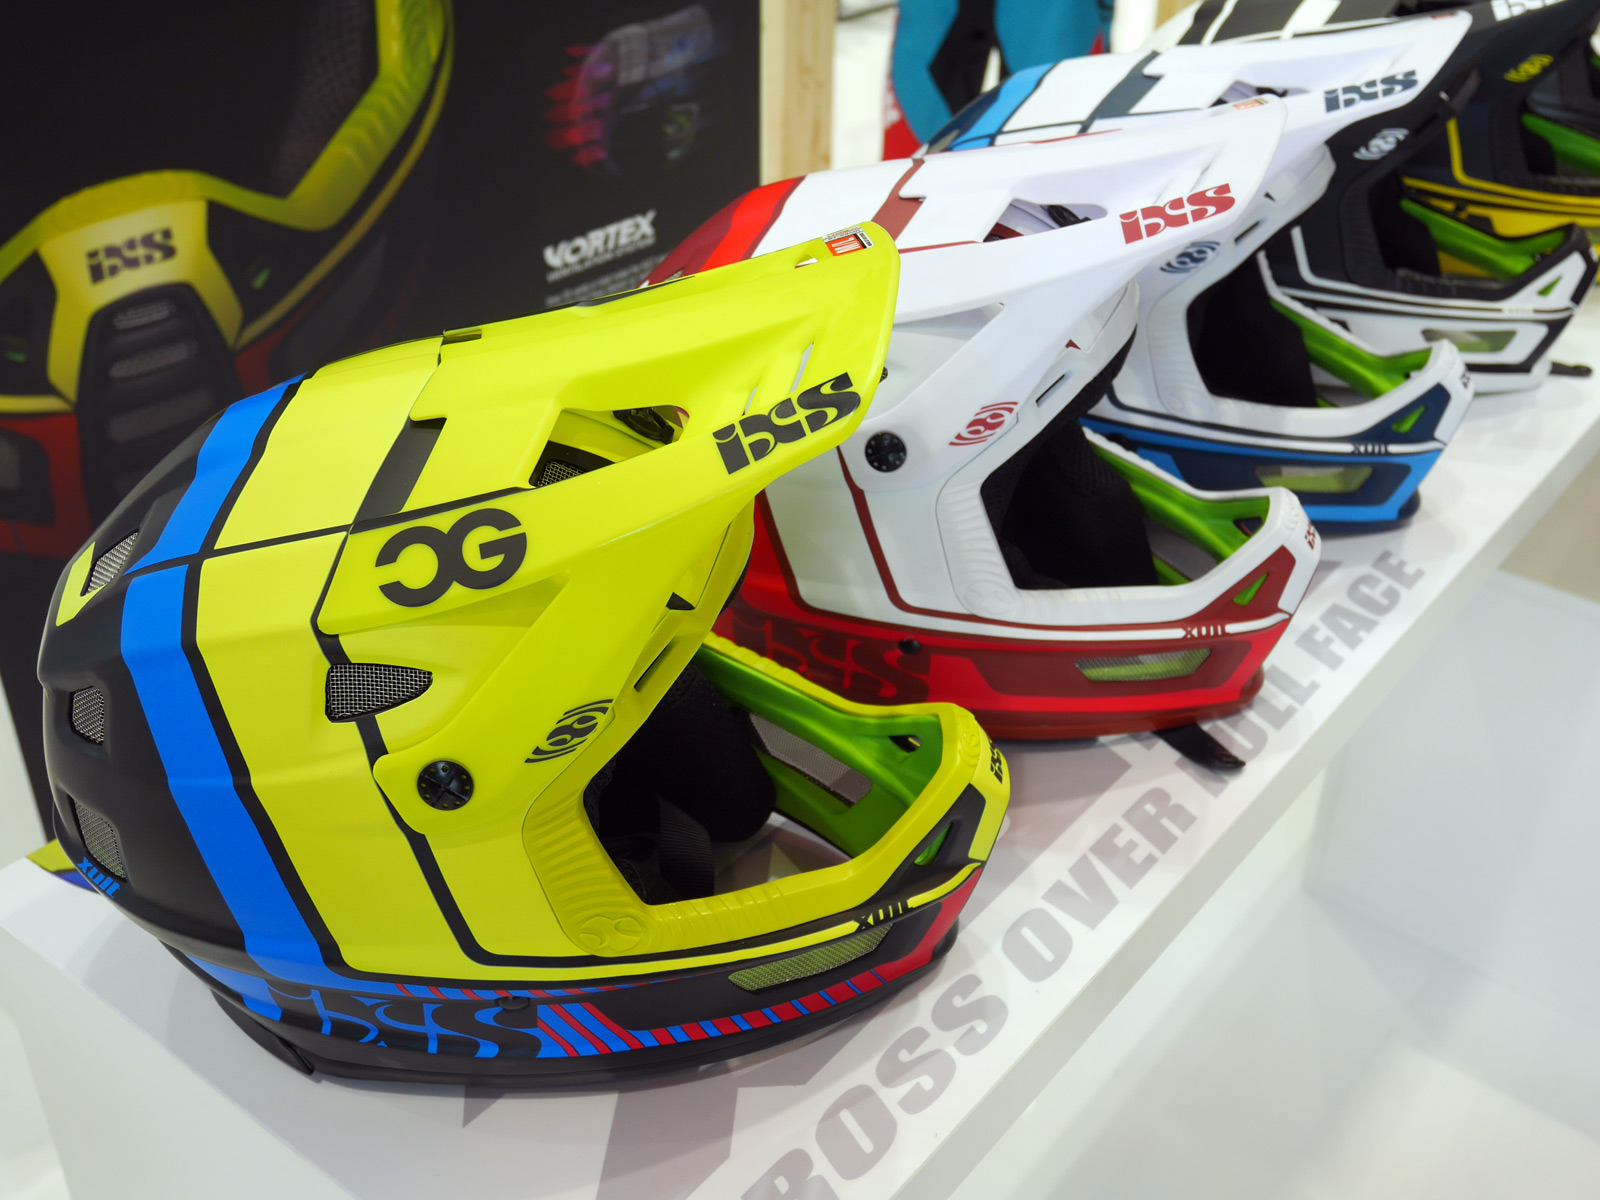 EB15: New IXS Pads and Kit, plus XULT Full-face Helmet closer look